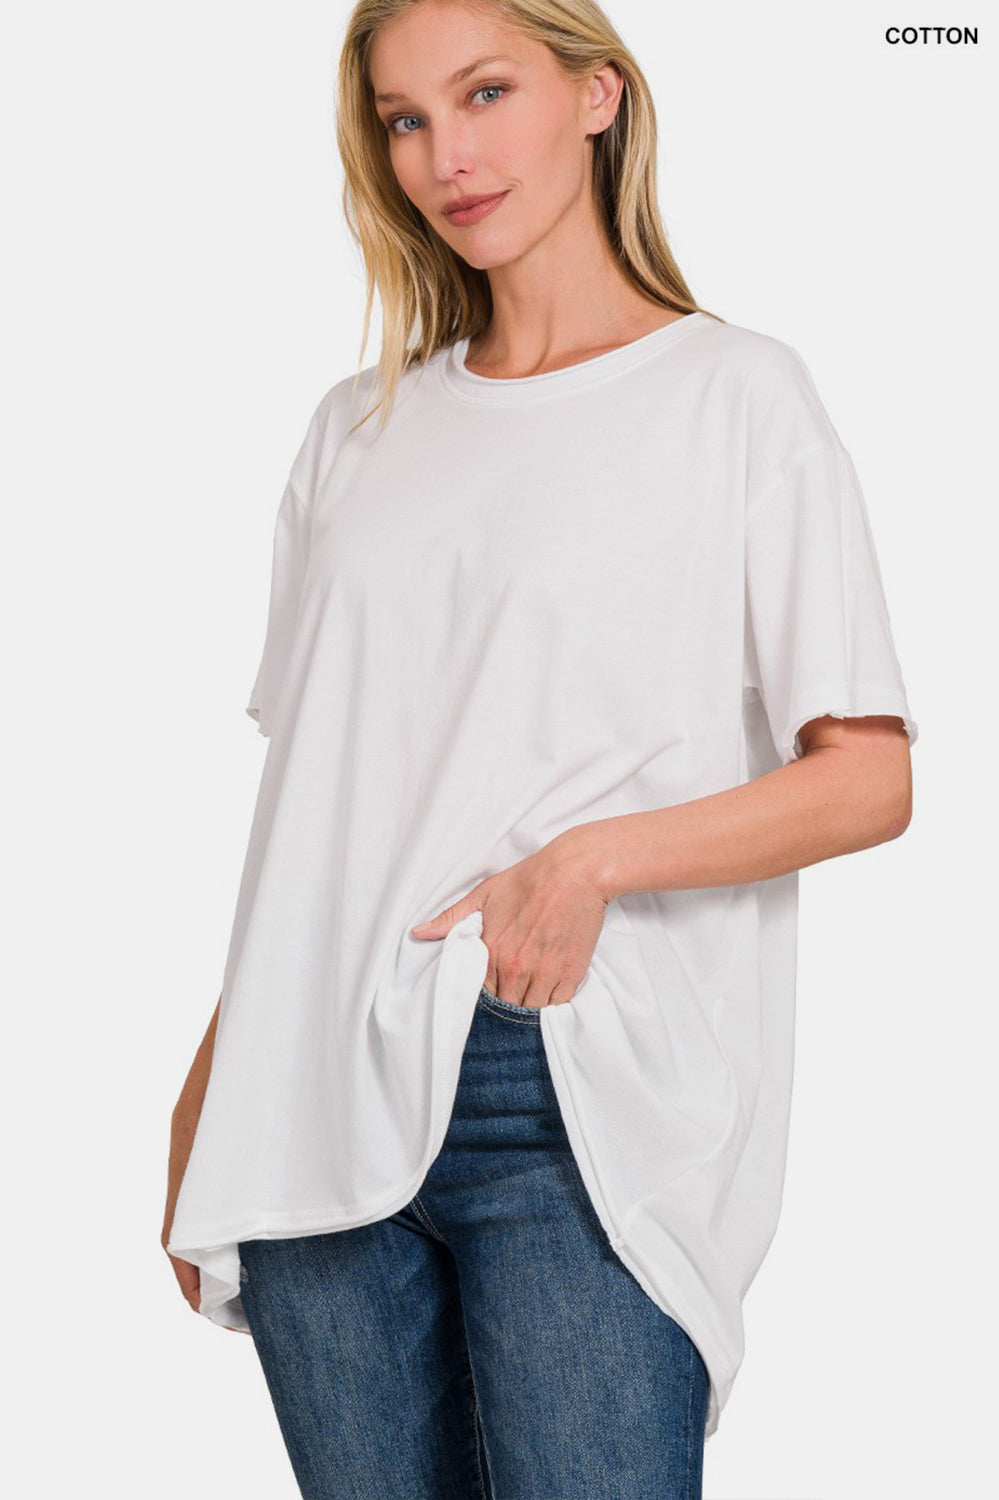 Zenana Round Neck Short Sleeve T-Shirt Trendsi